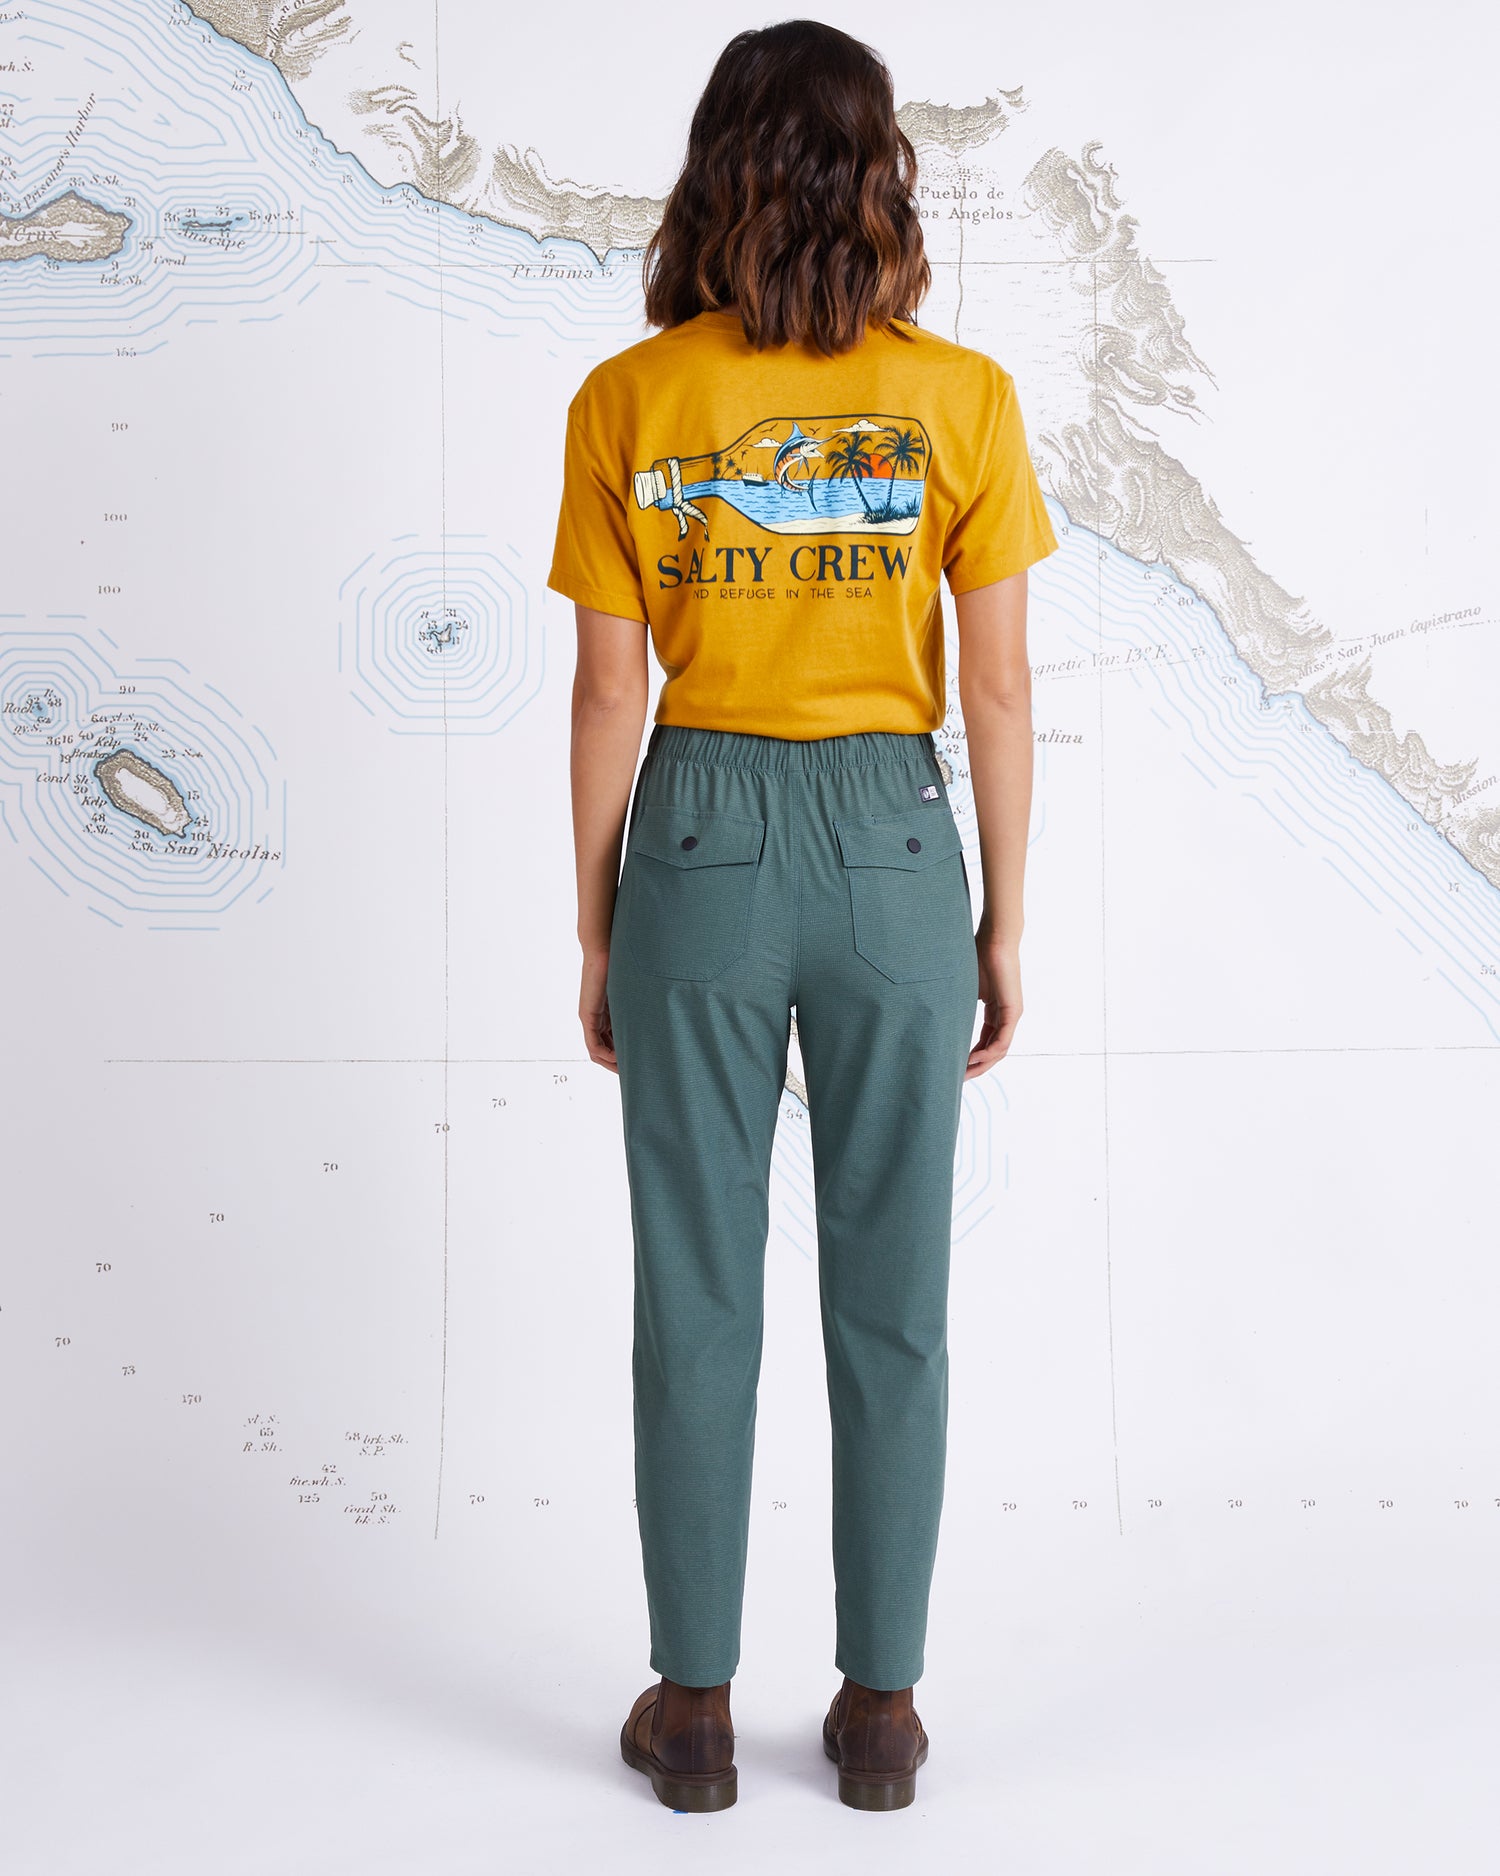 Salty Crew Women's Pants - Migration Rover Pant